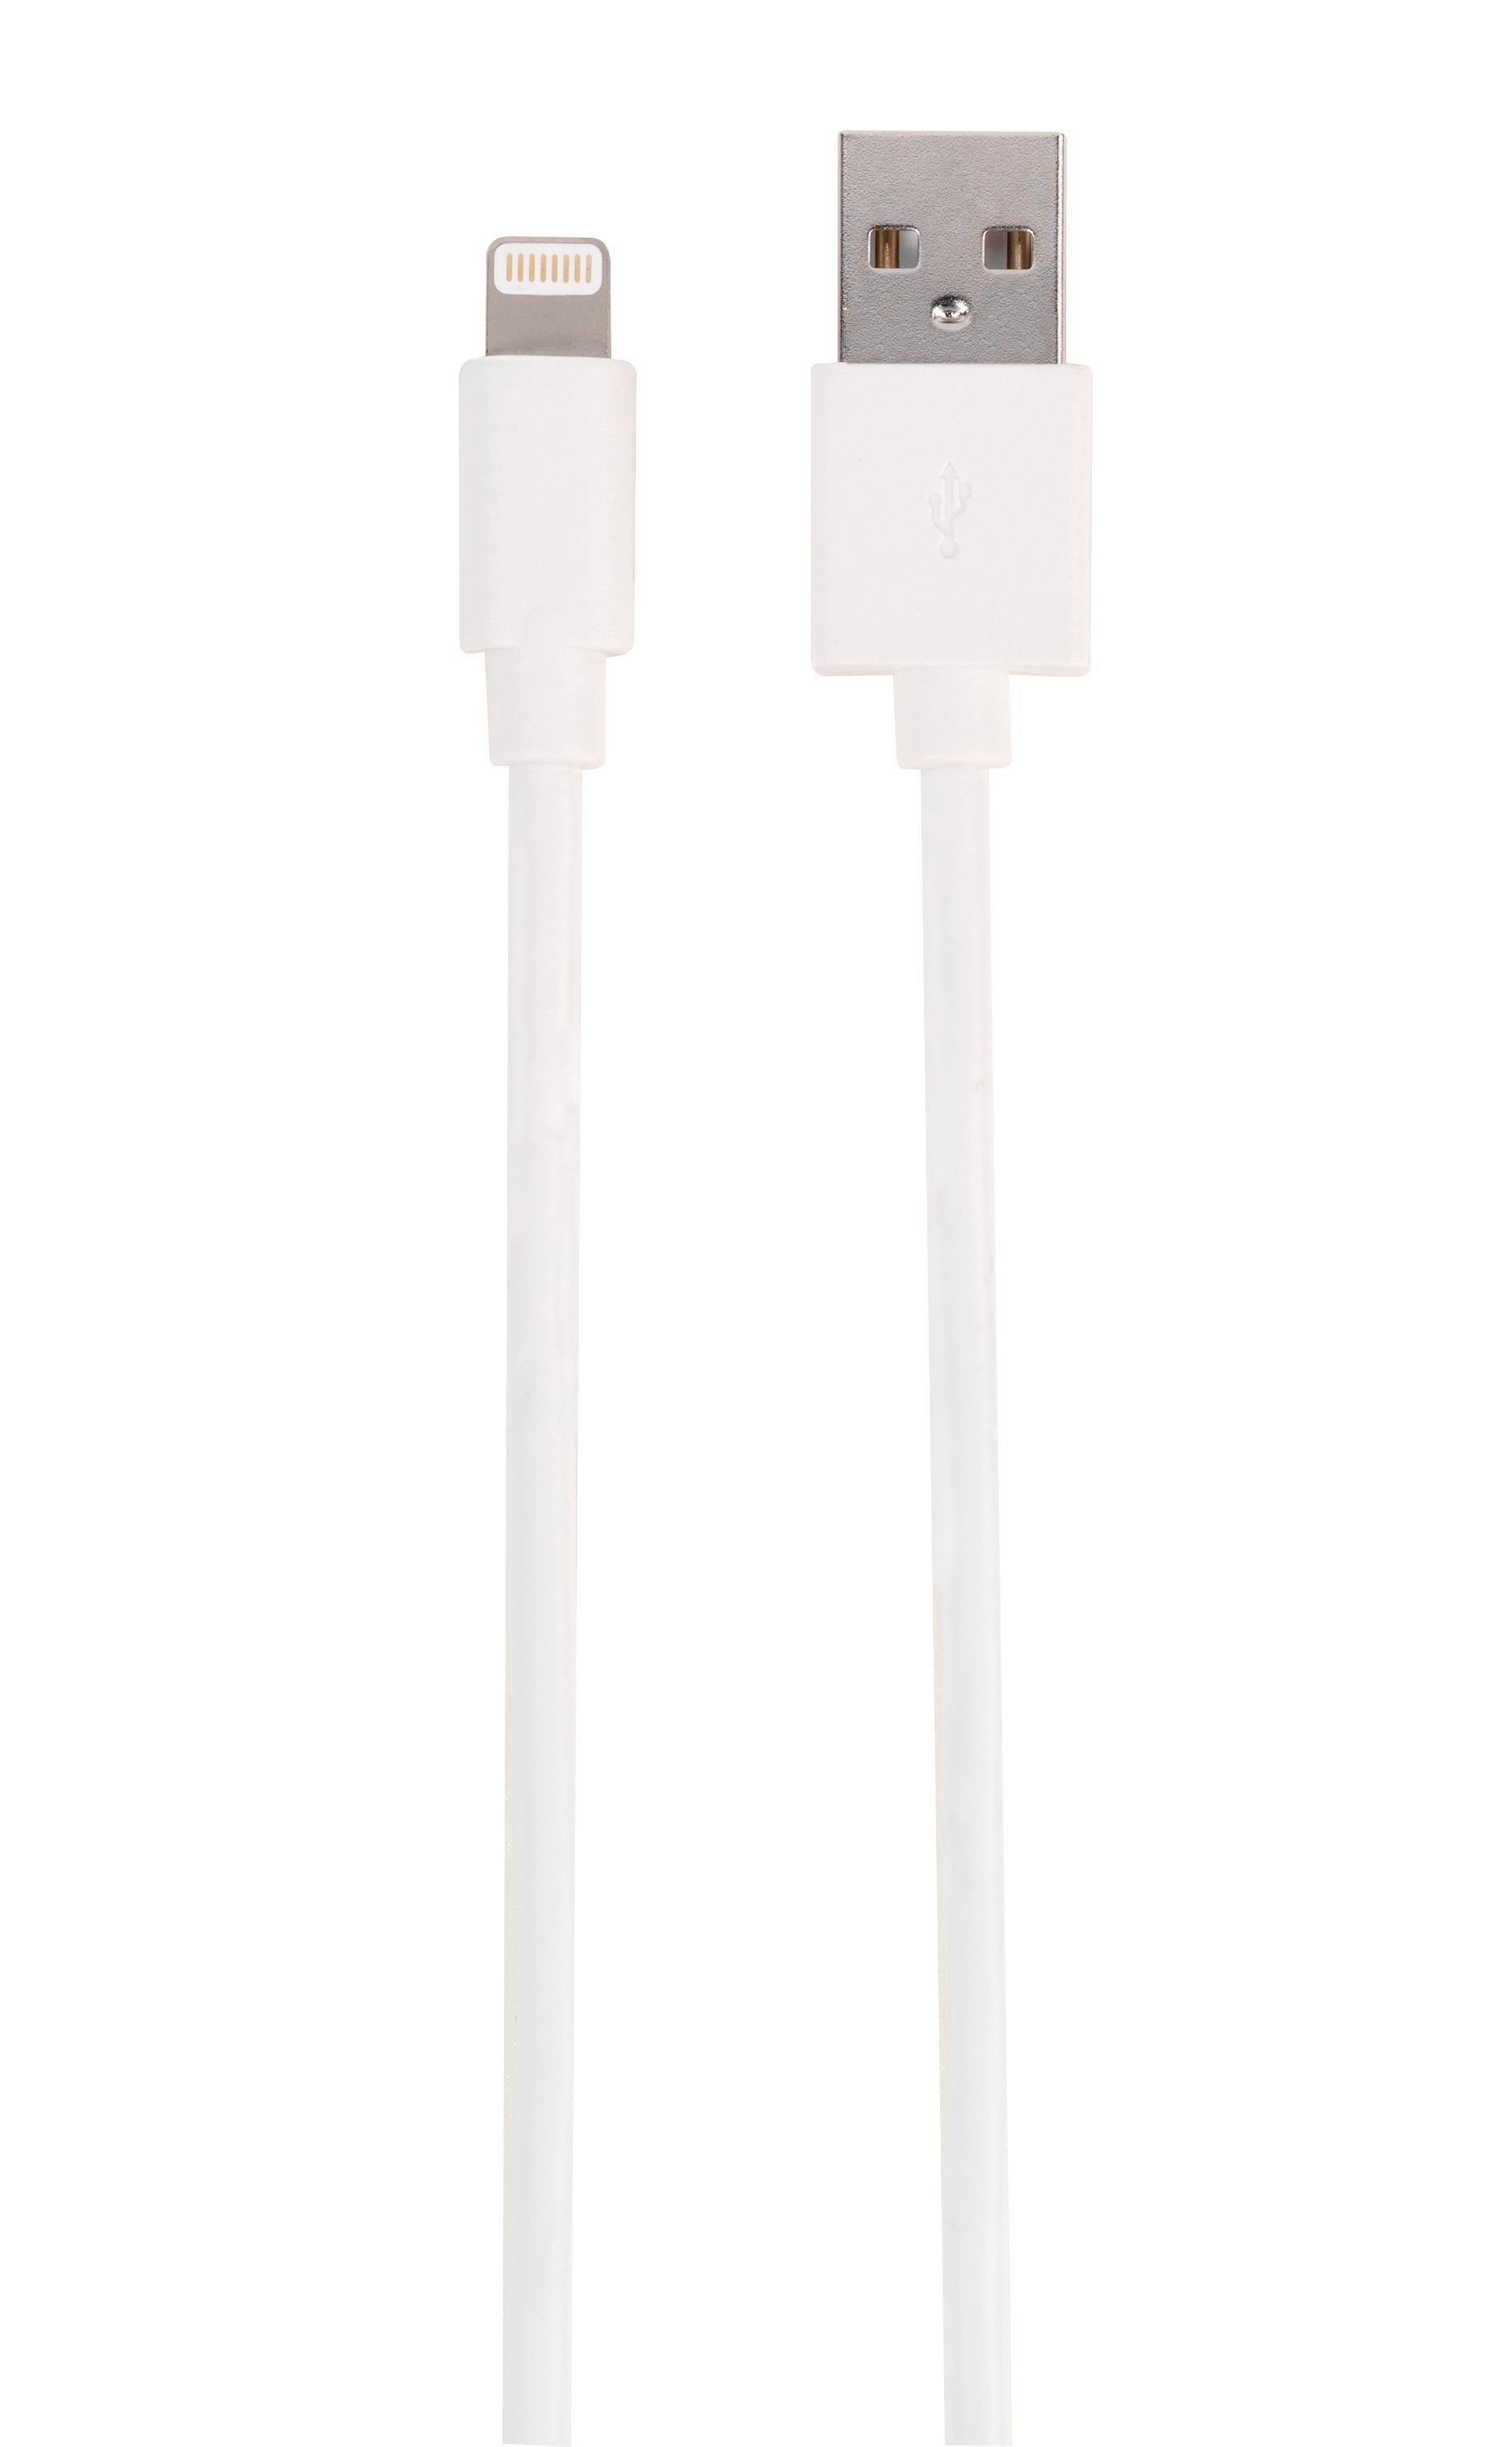 VIVANCO Lightning 0,5 Ladekabel, USB, m, Weiß